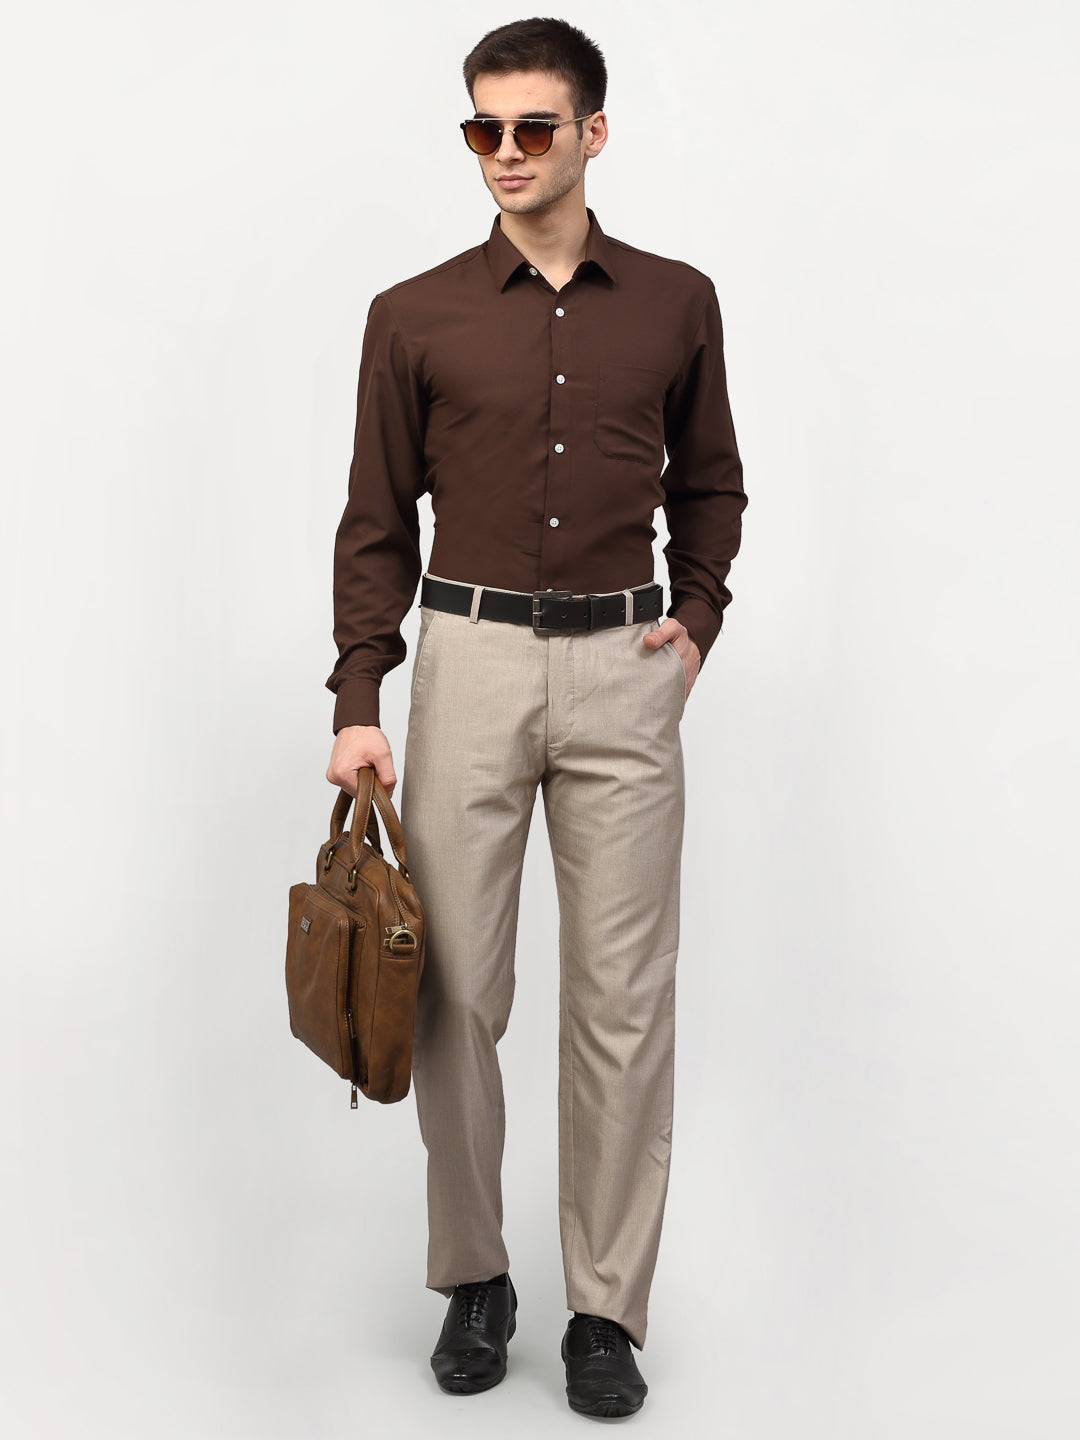 Men's Brown Solid Formal Shirts ( SF 777Coffee ) - Jainish